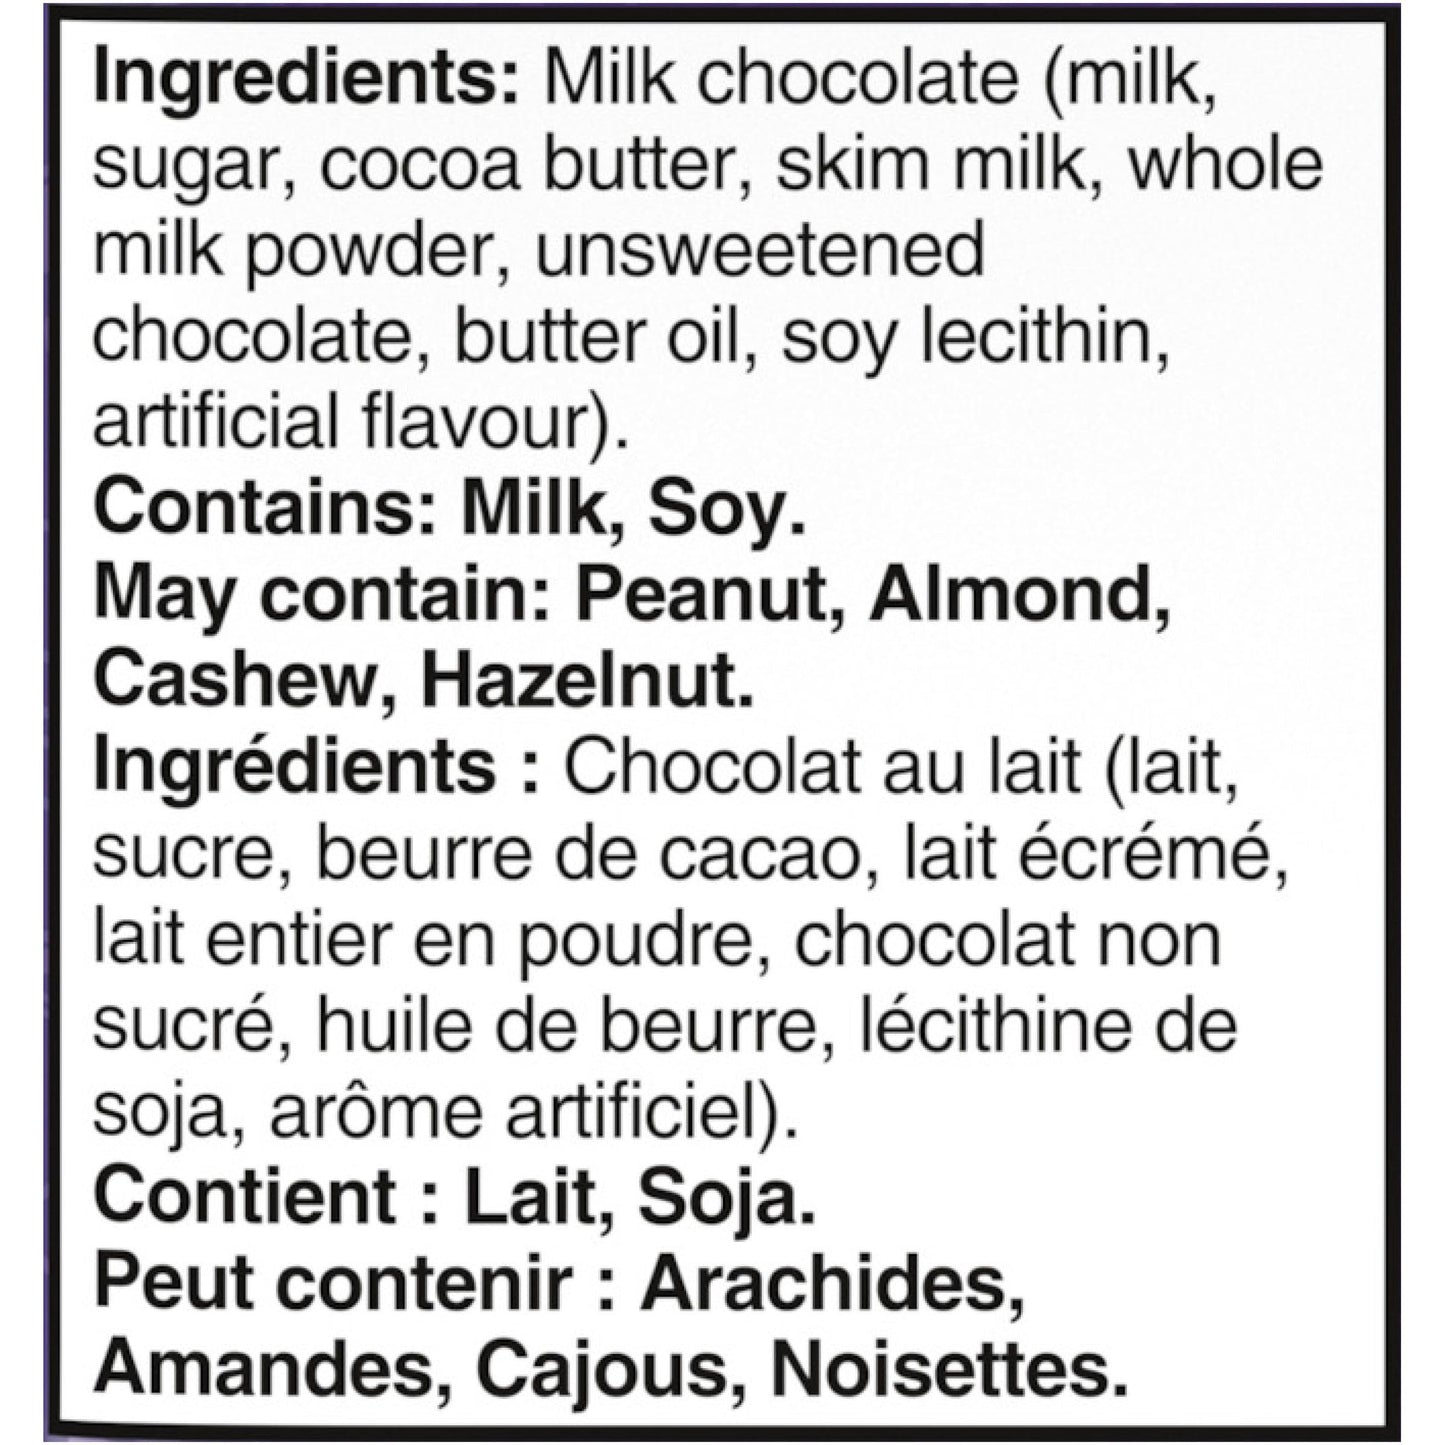 Cadbury Dairy Milk Chocolate Bar 200g/7oz (Shipped from Canada)